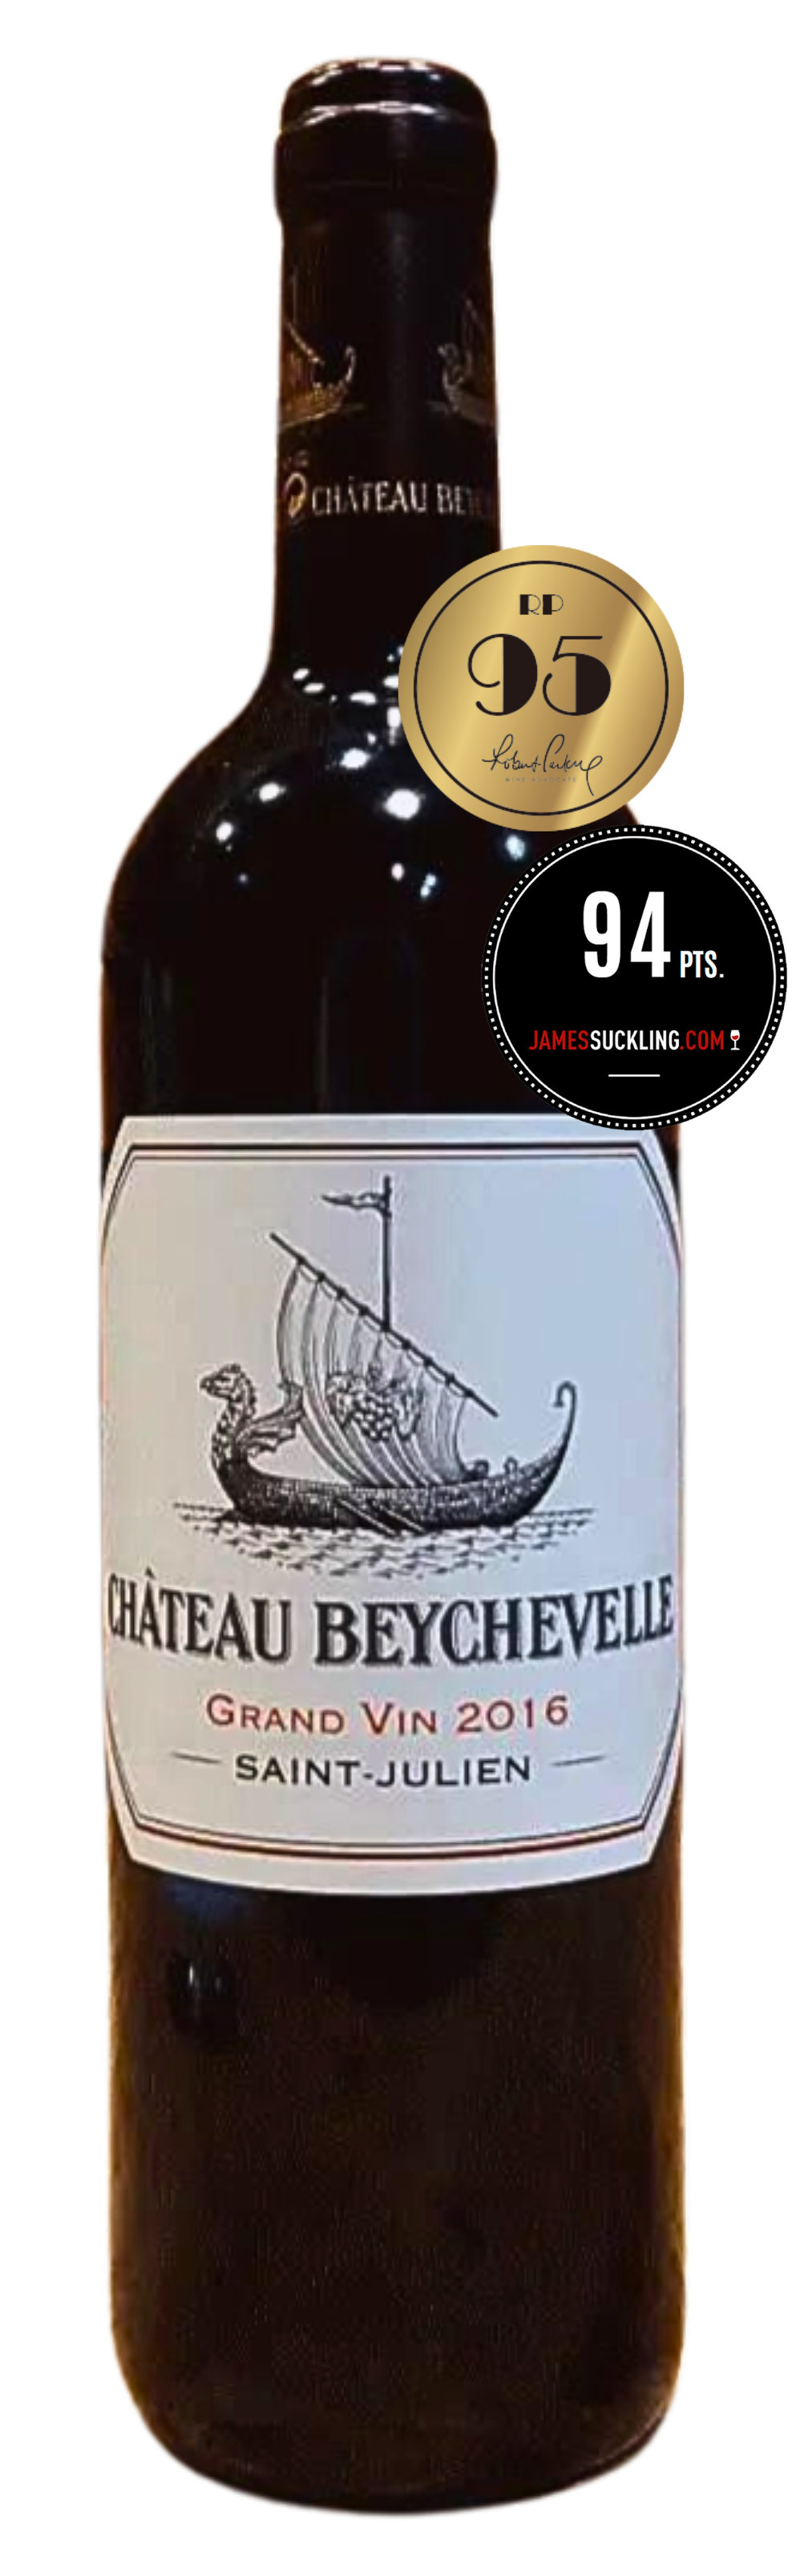 Château Beychevelle 2016 (RP:95+, JS:94)